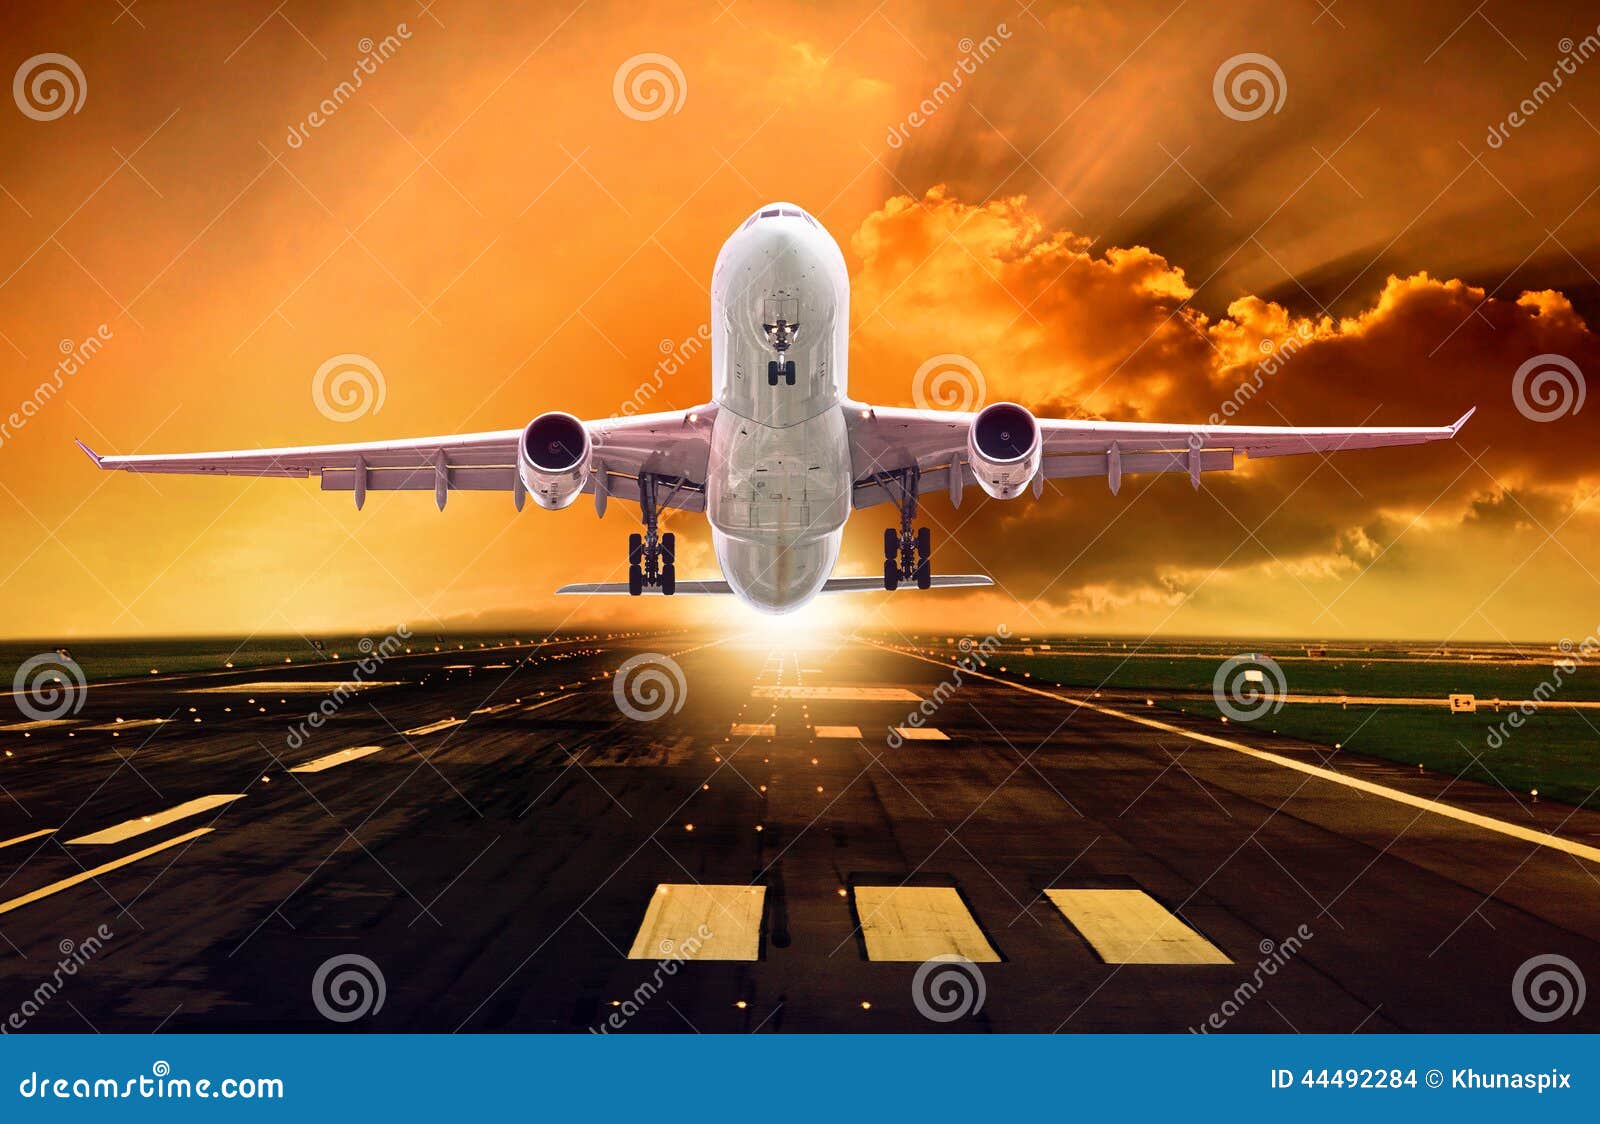 passenger plane take off from runways against beautiful dusky sk